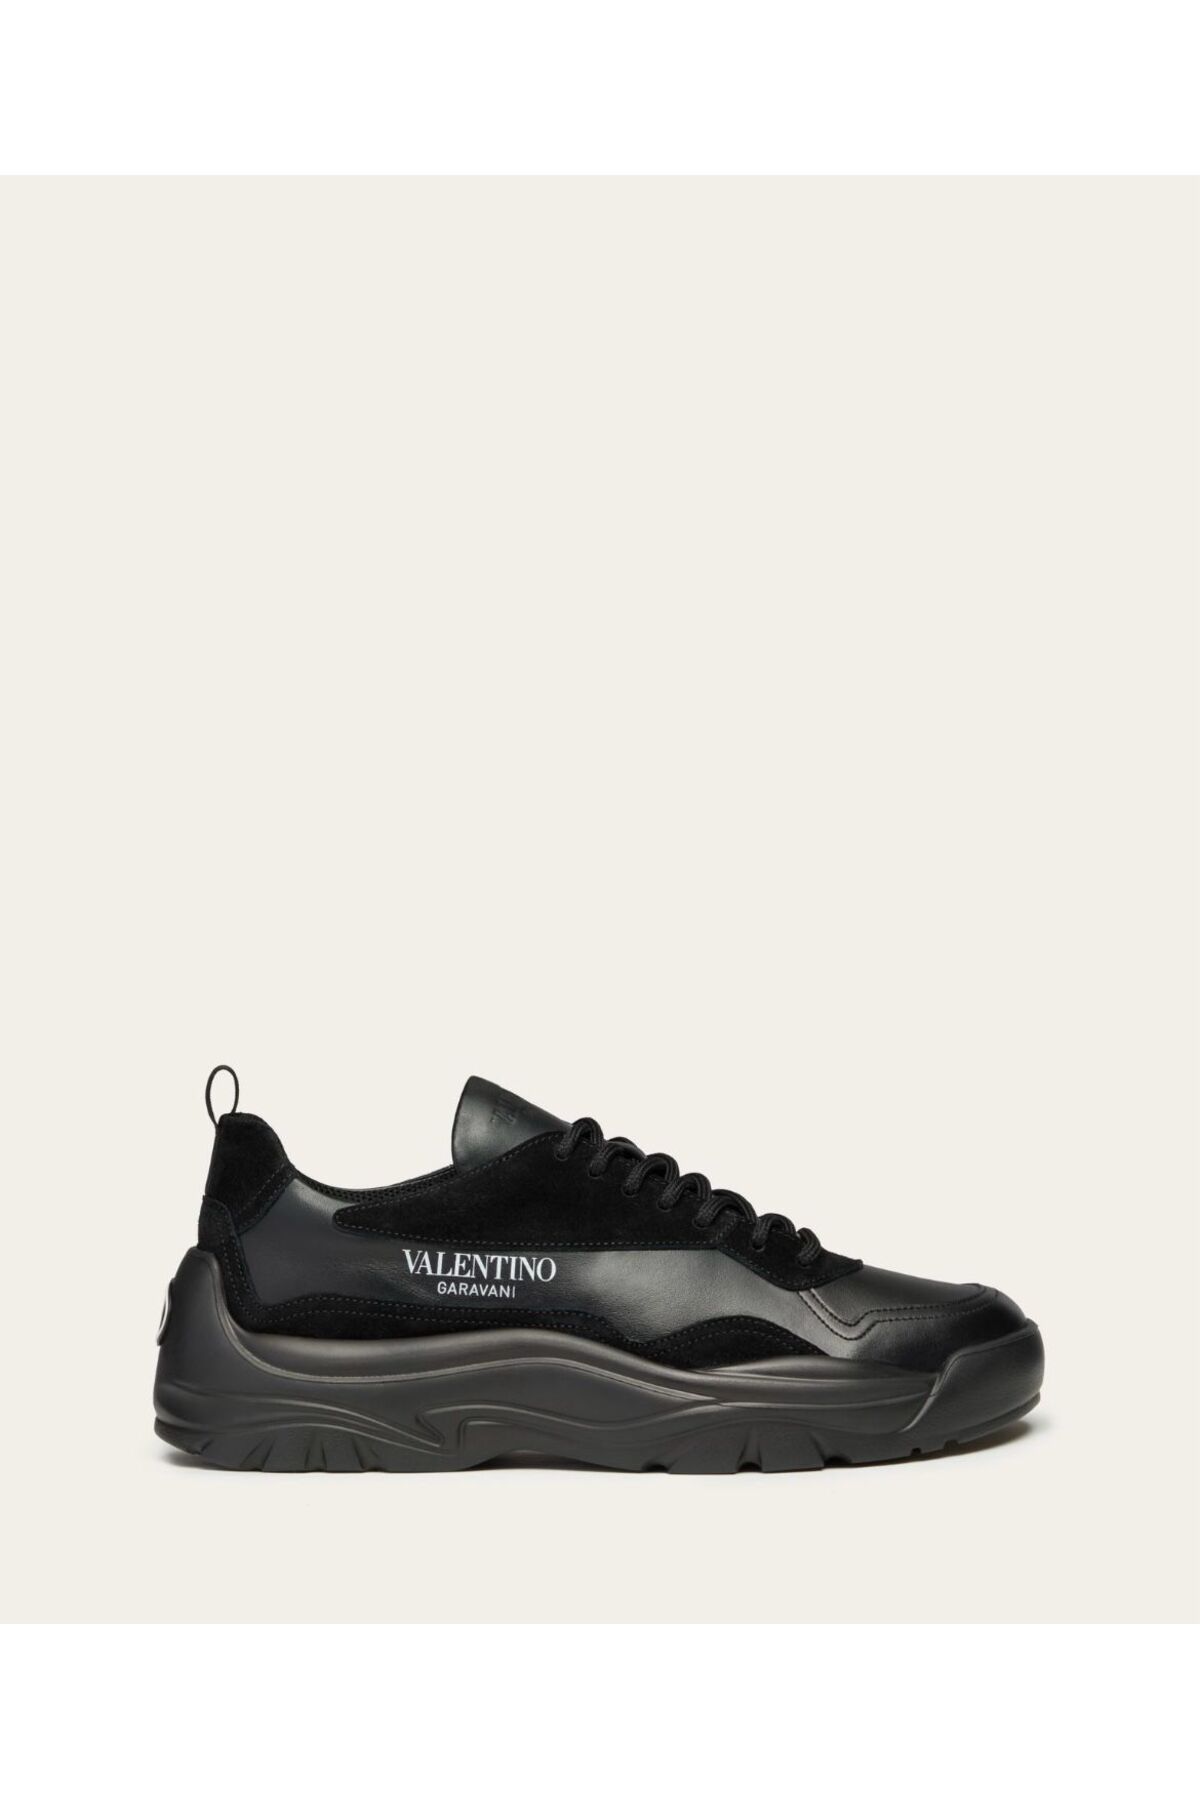 Valentino Garavani Gumboy Calfskin Sneaker